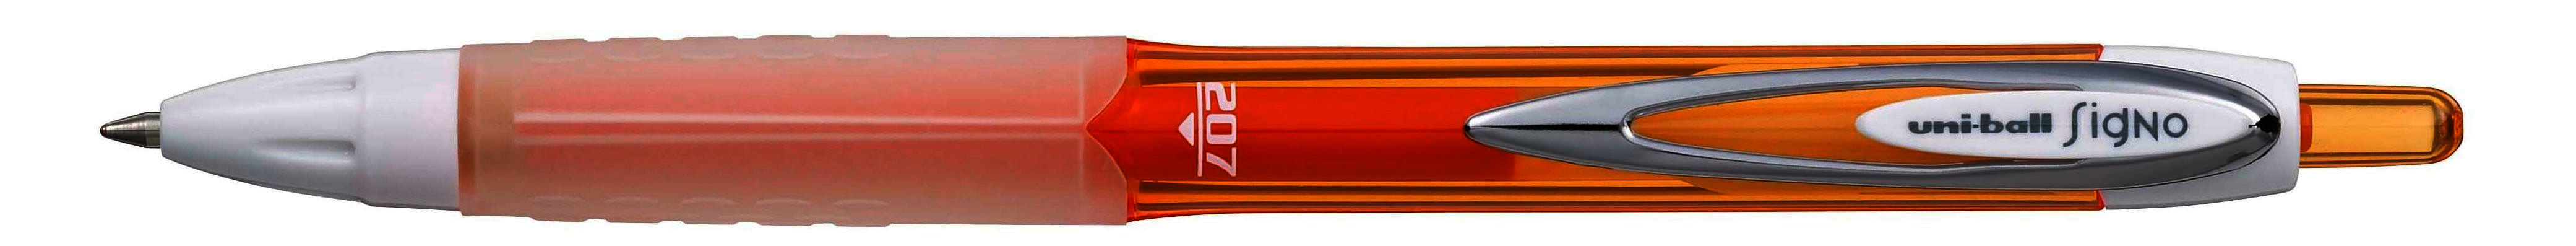 Bolígrafo Uni Signo Fancy Colors naranja UMN-207F